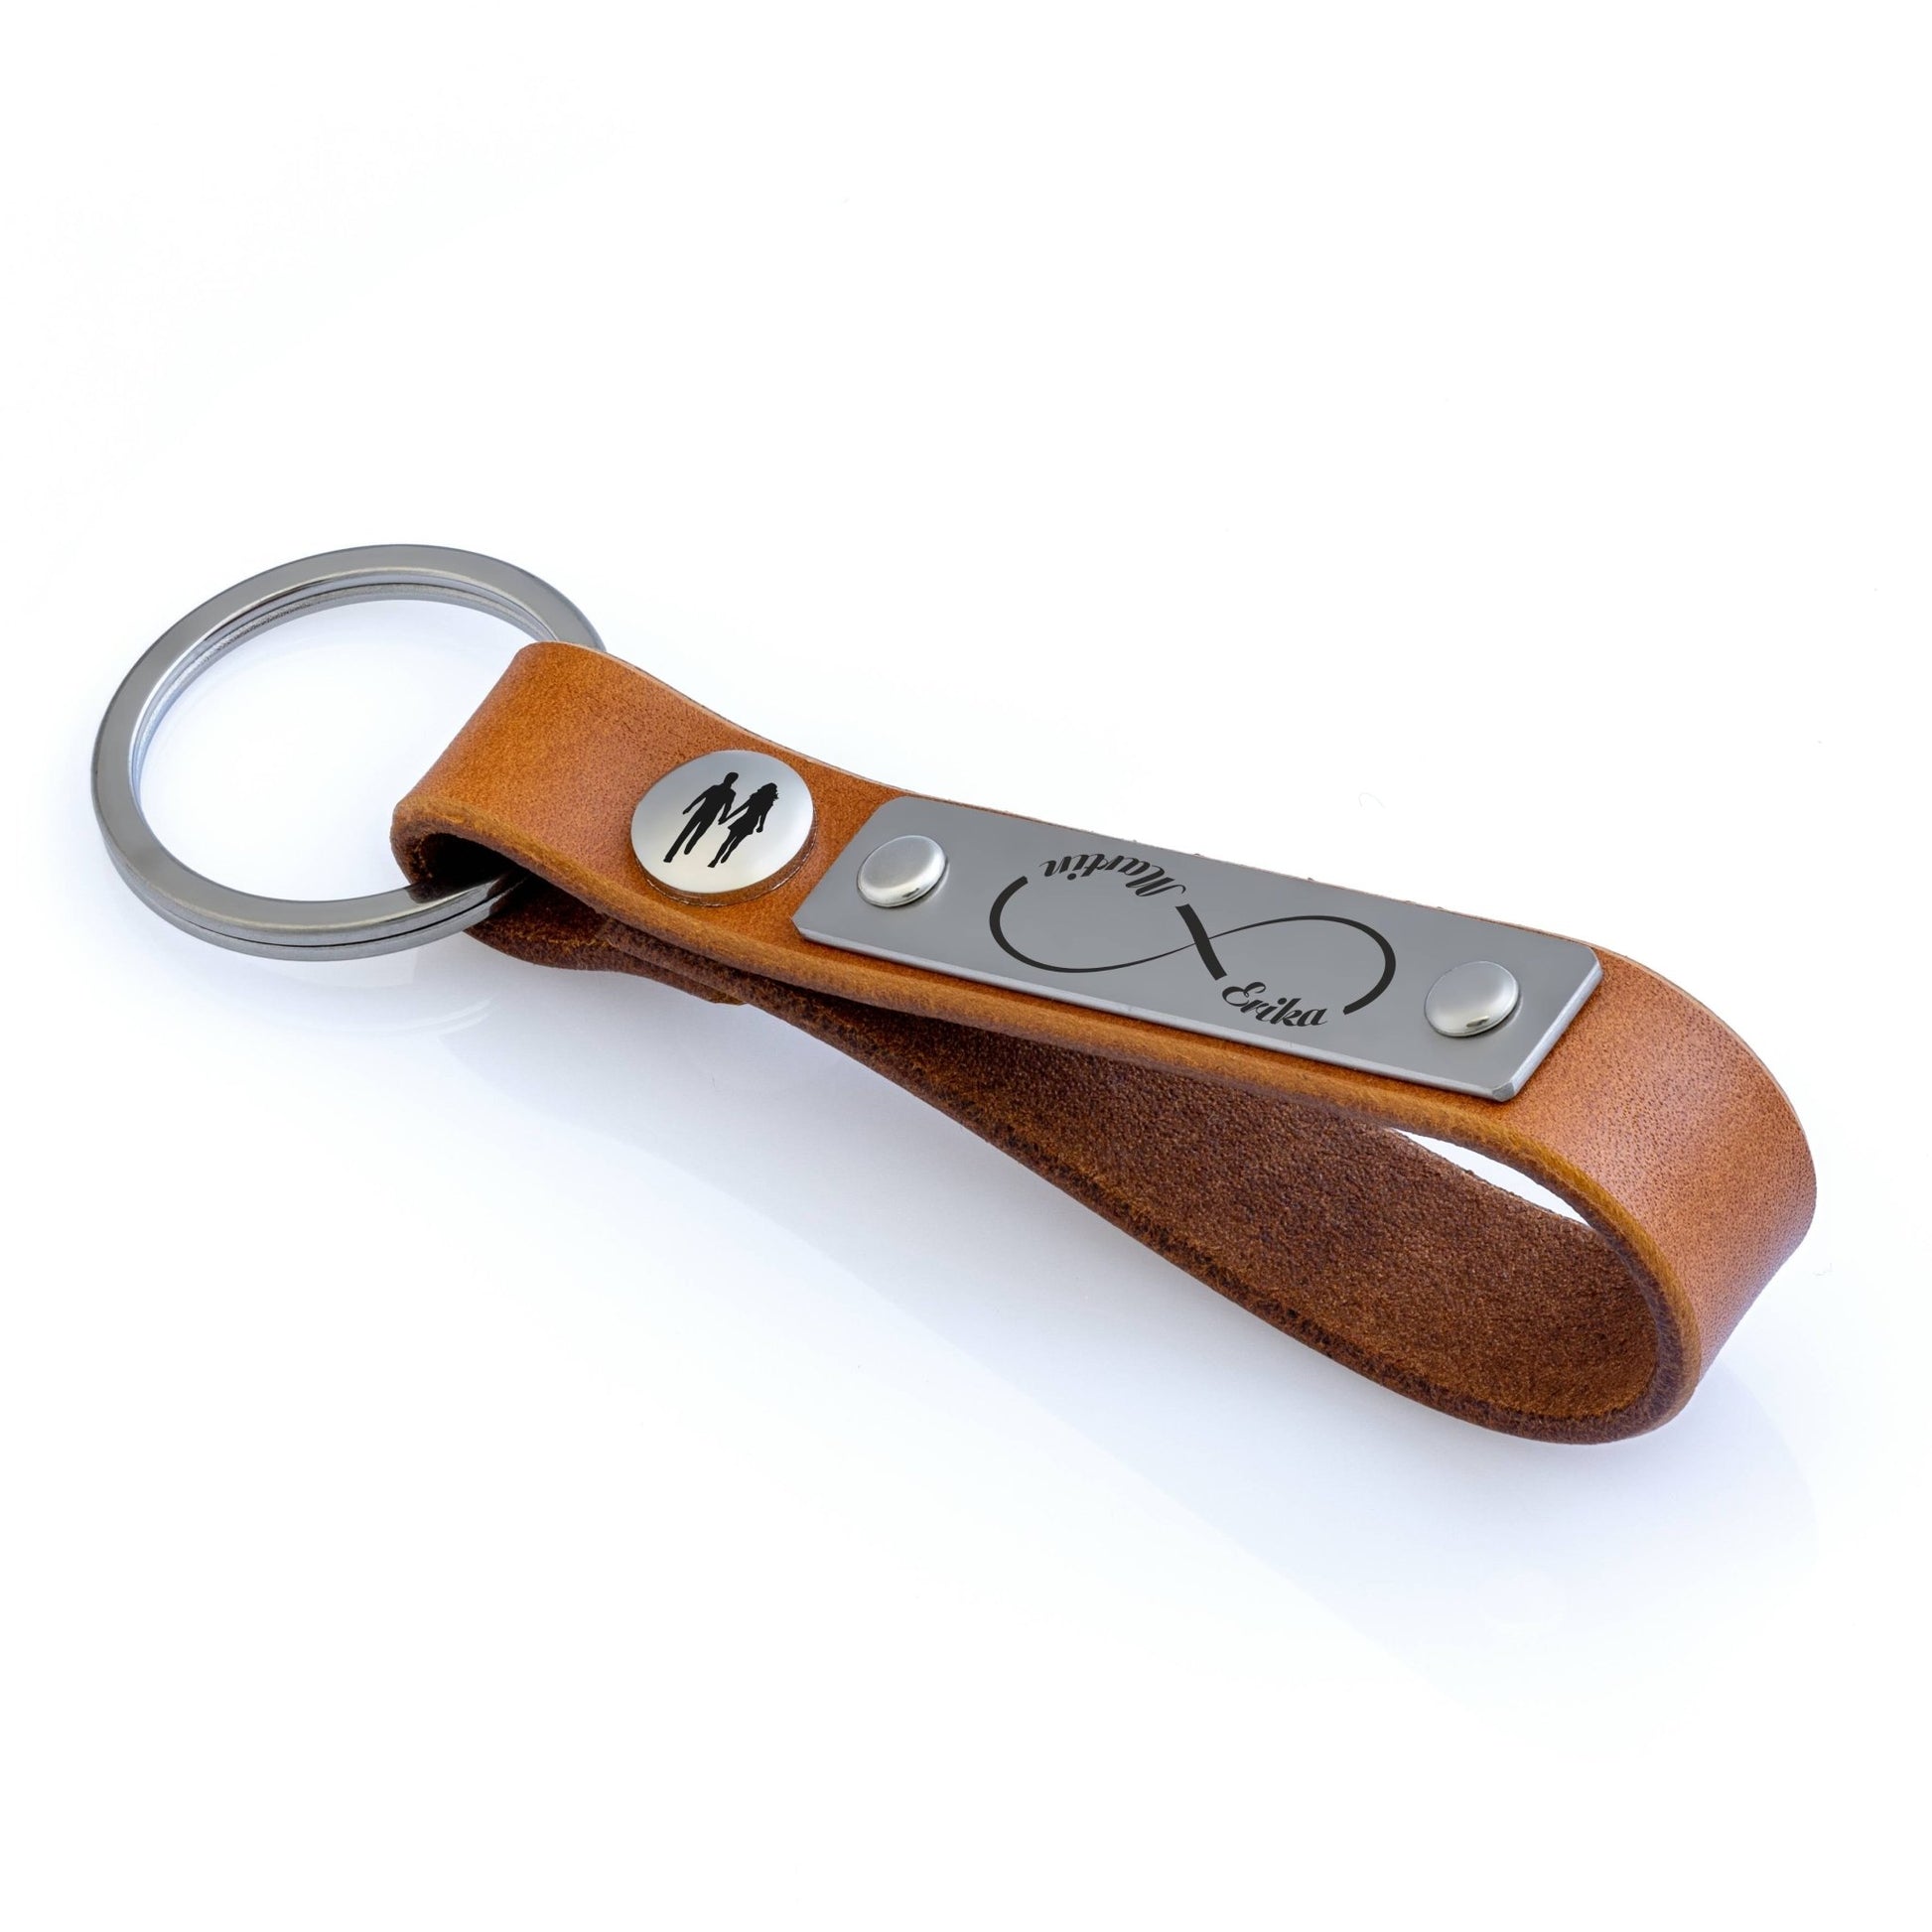 Kaufe Männer Leder Schlüsselanhänger Metall Auto Schlüsselanhänger  Schlüsselanhänger Geschenk personalisierte Ketten